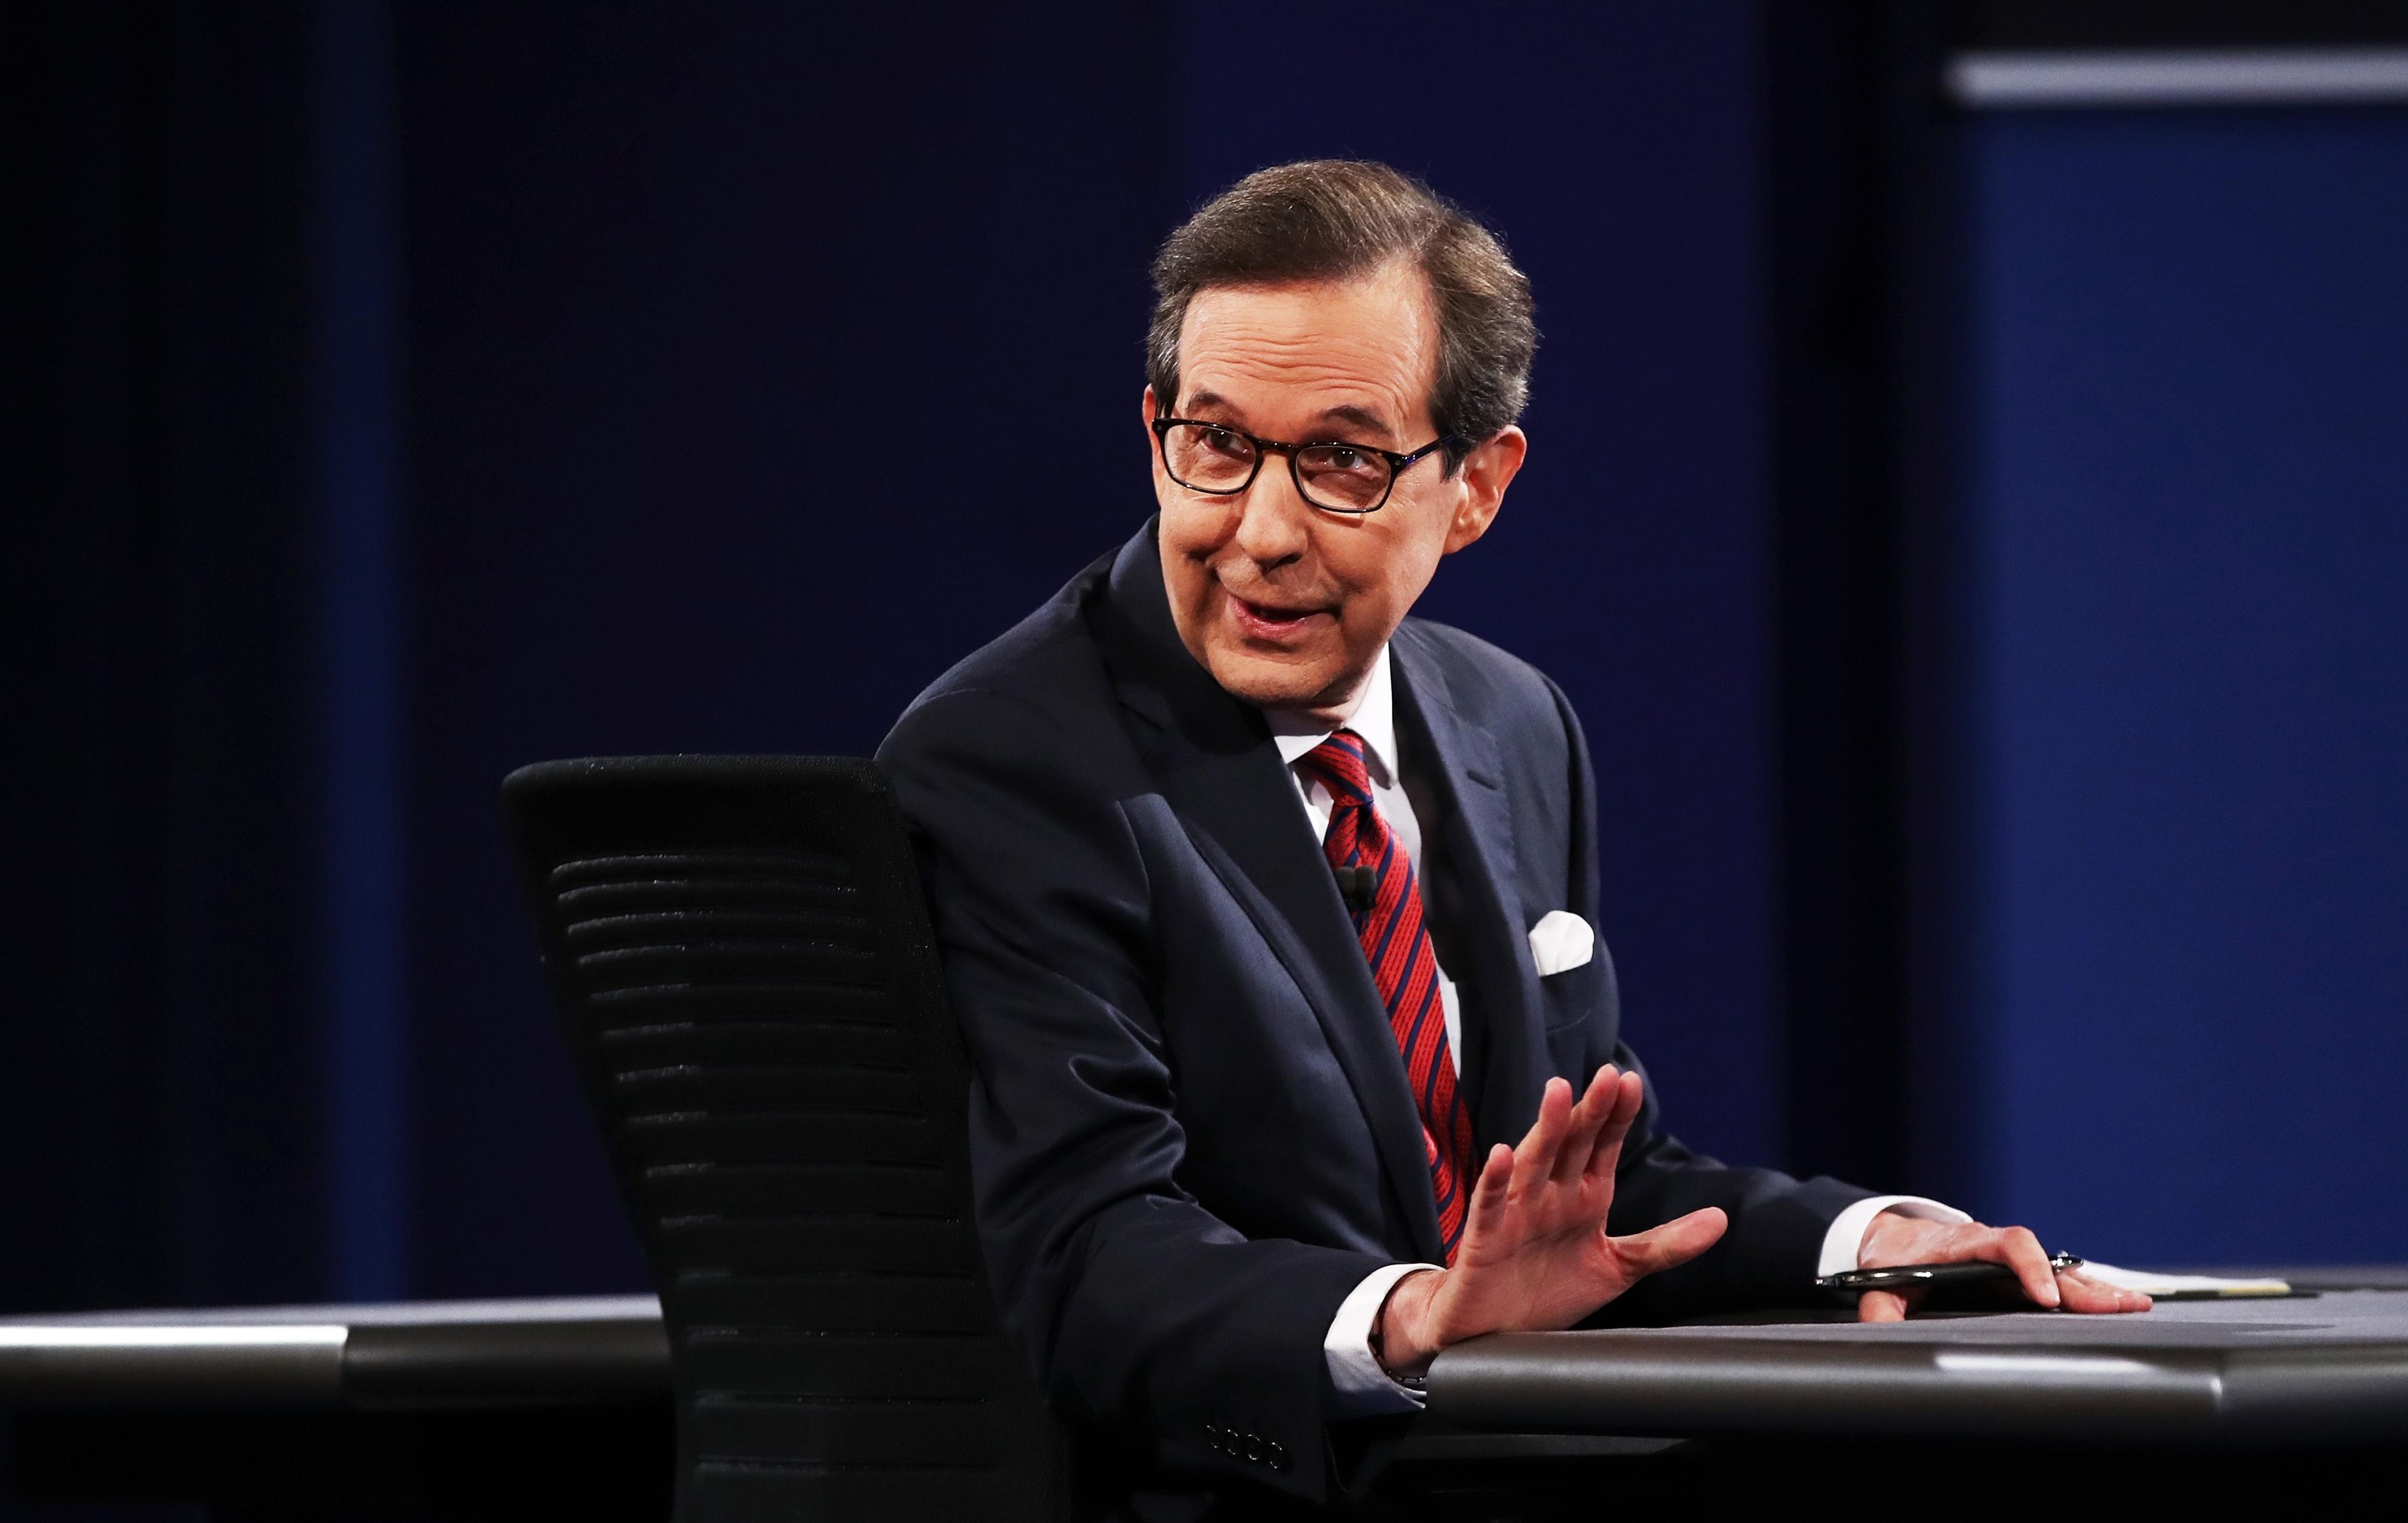 Chris Wallace moderating the hird U.S. presidential debate in 2016